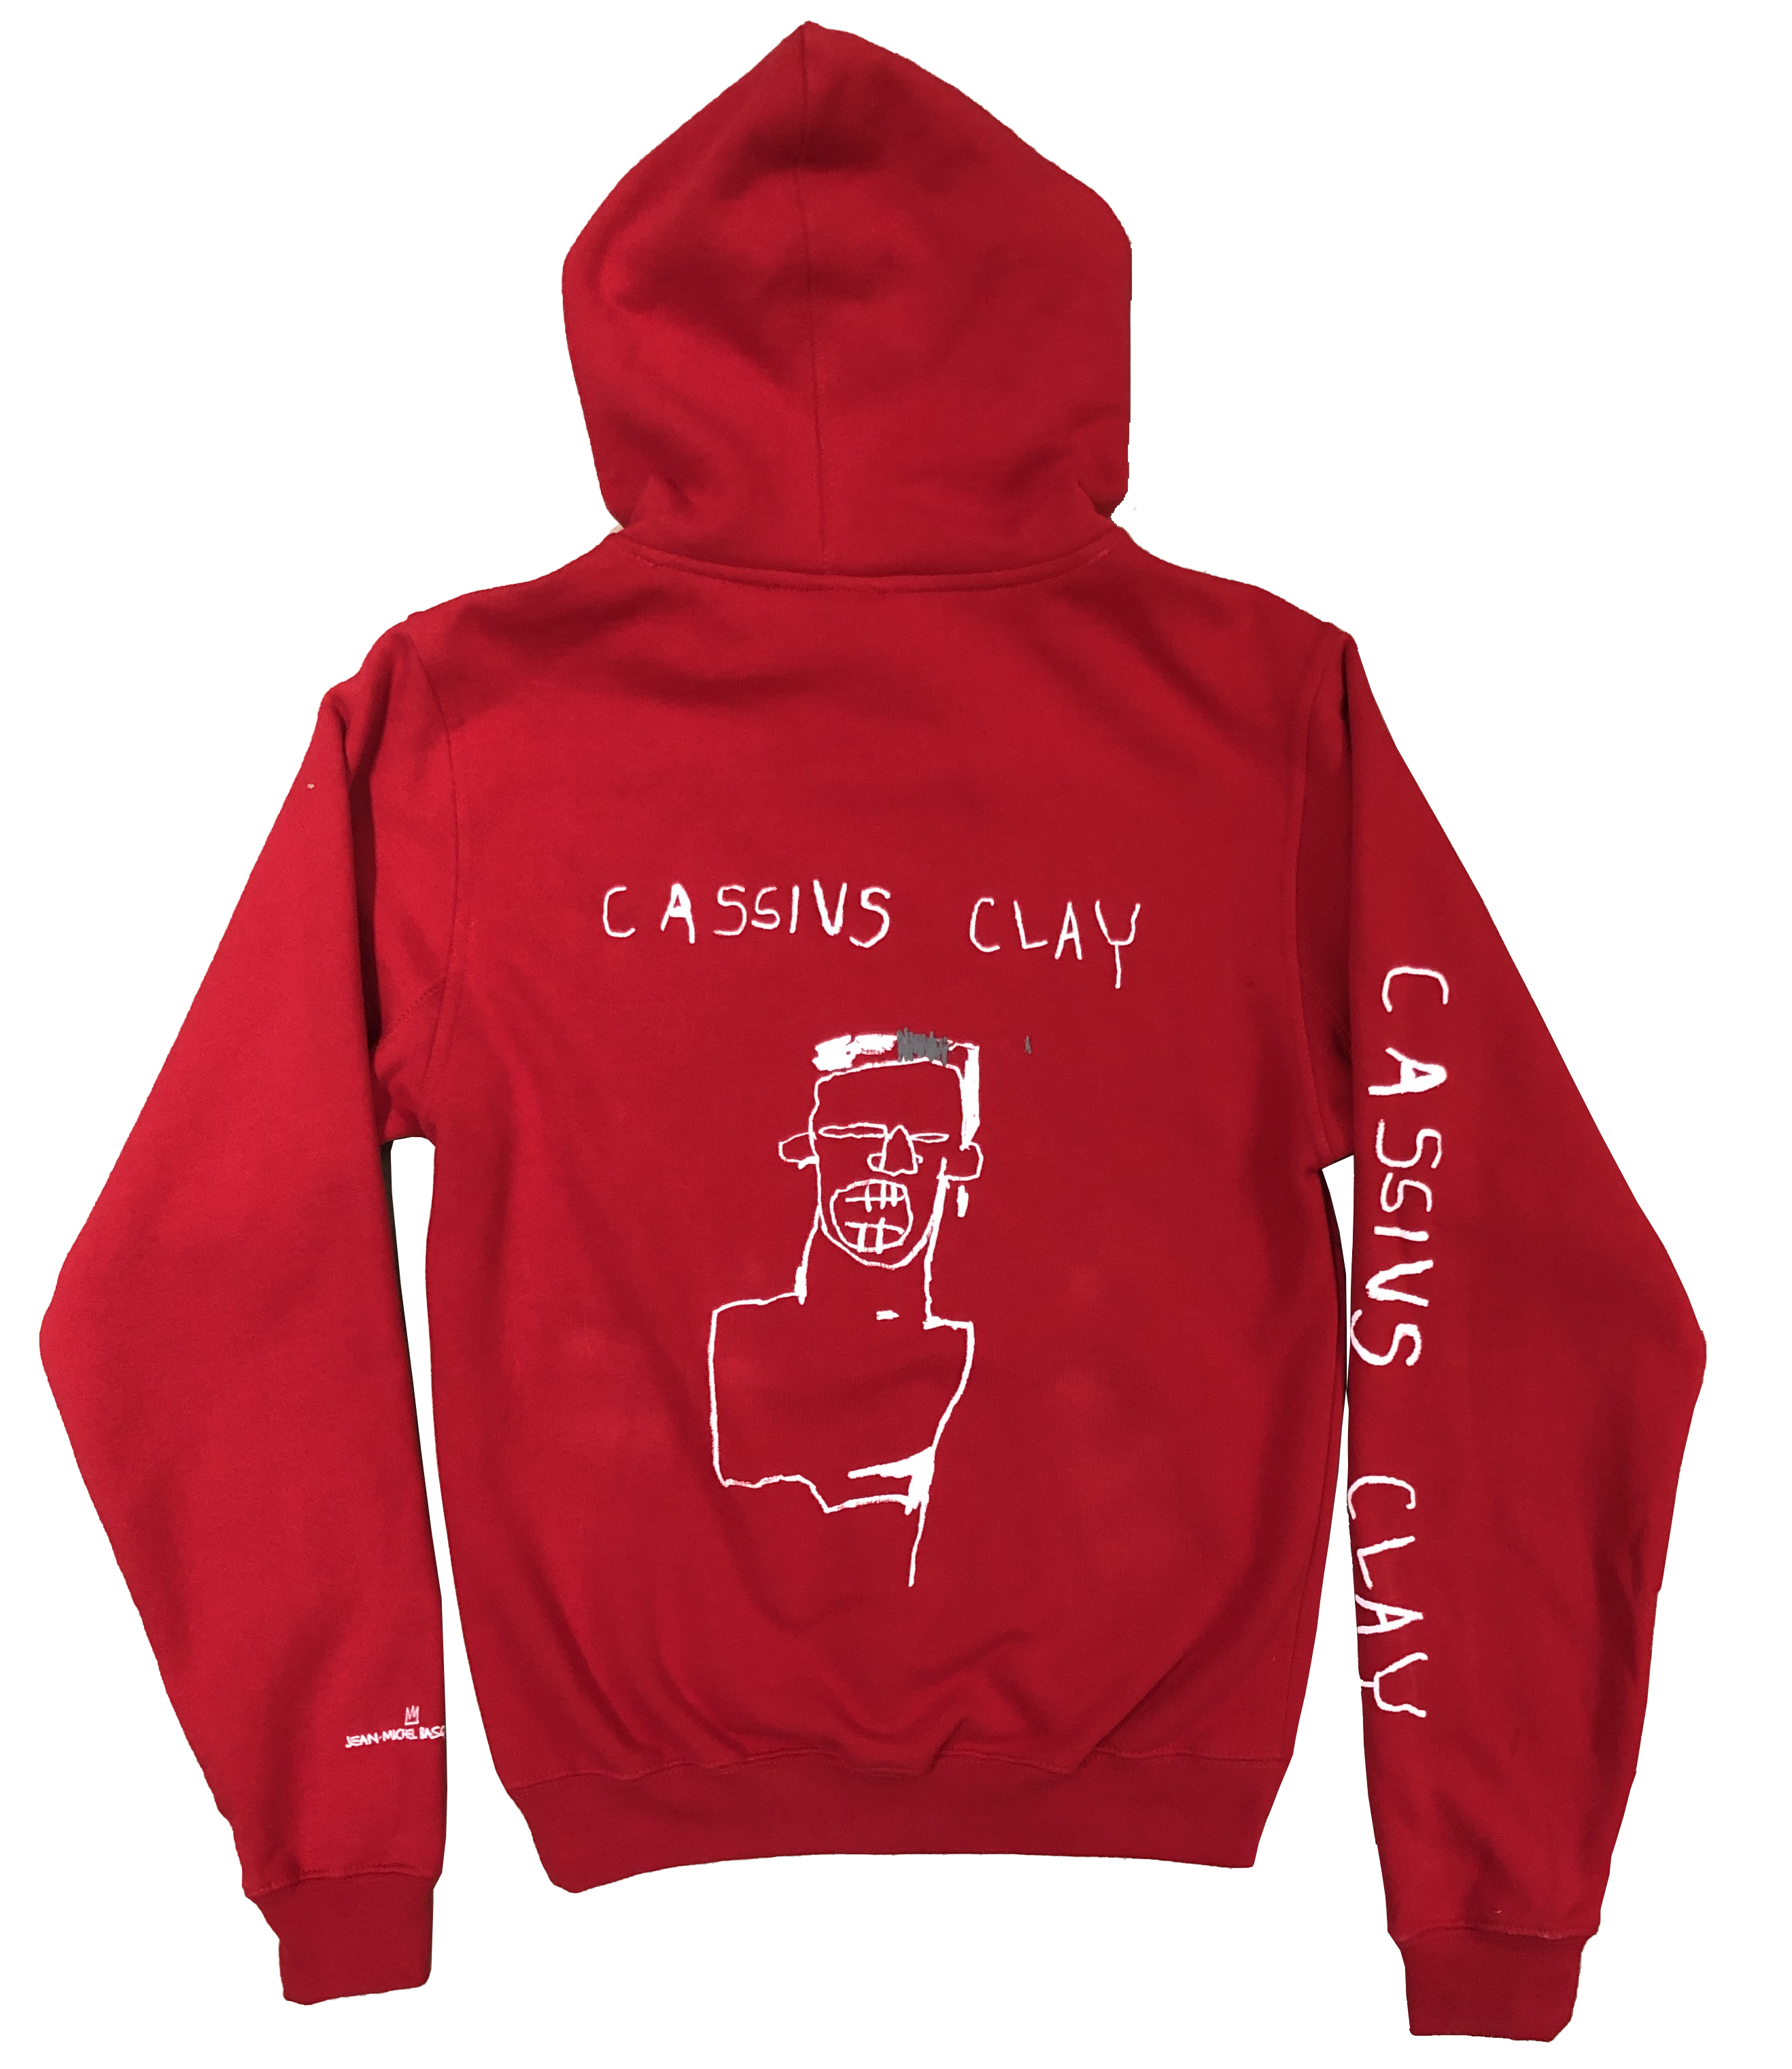 Basquiat Cassius Clay Unisex Hoodie - The Brant Foundation Shop